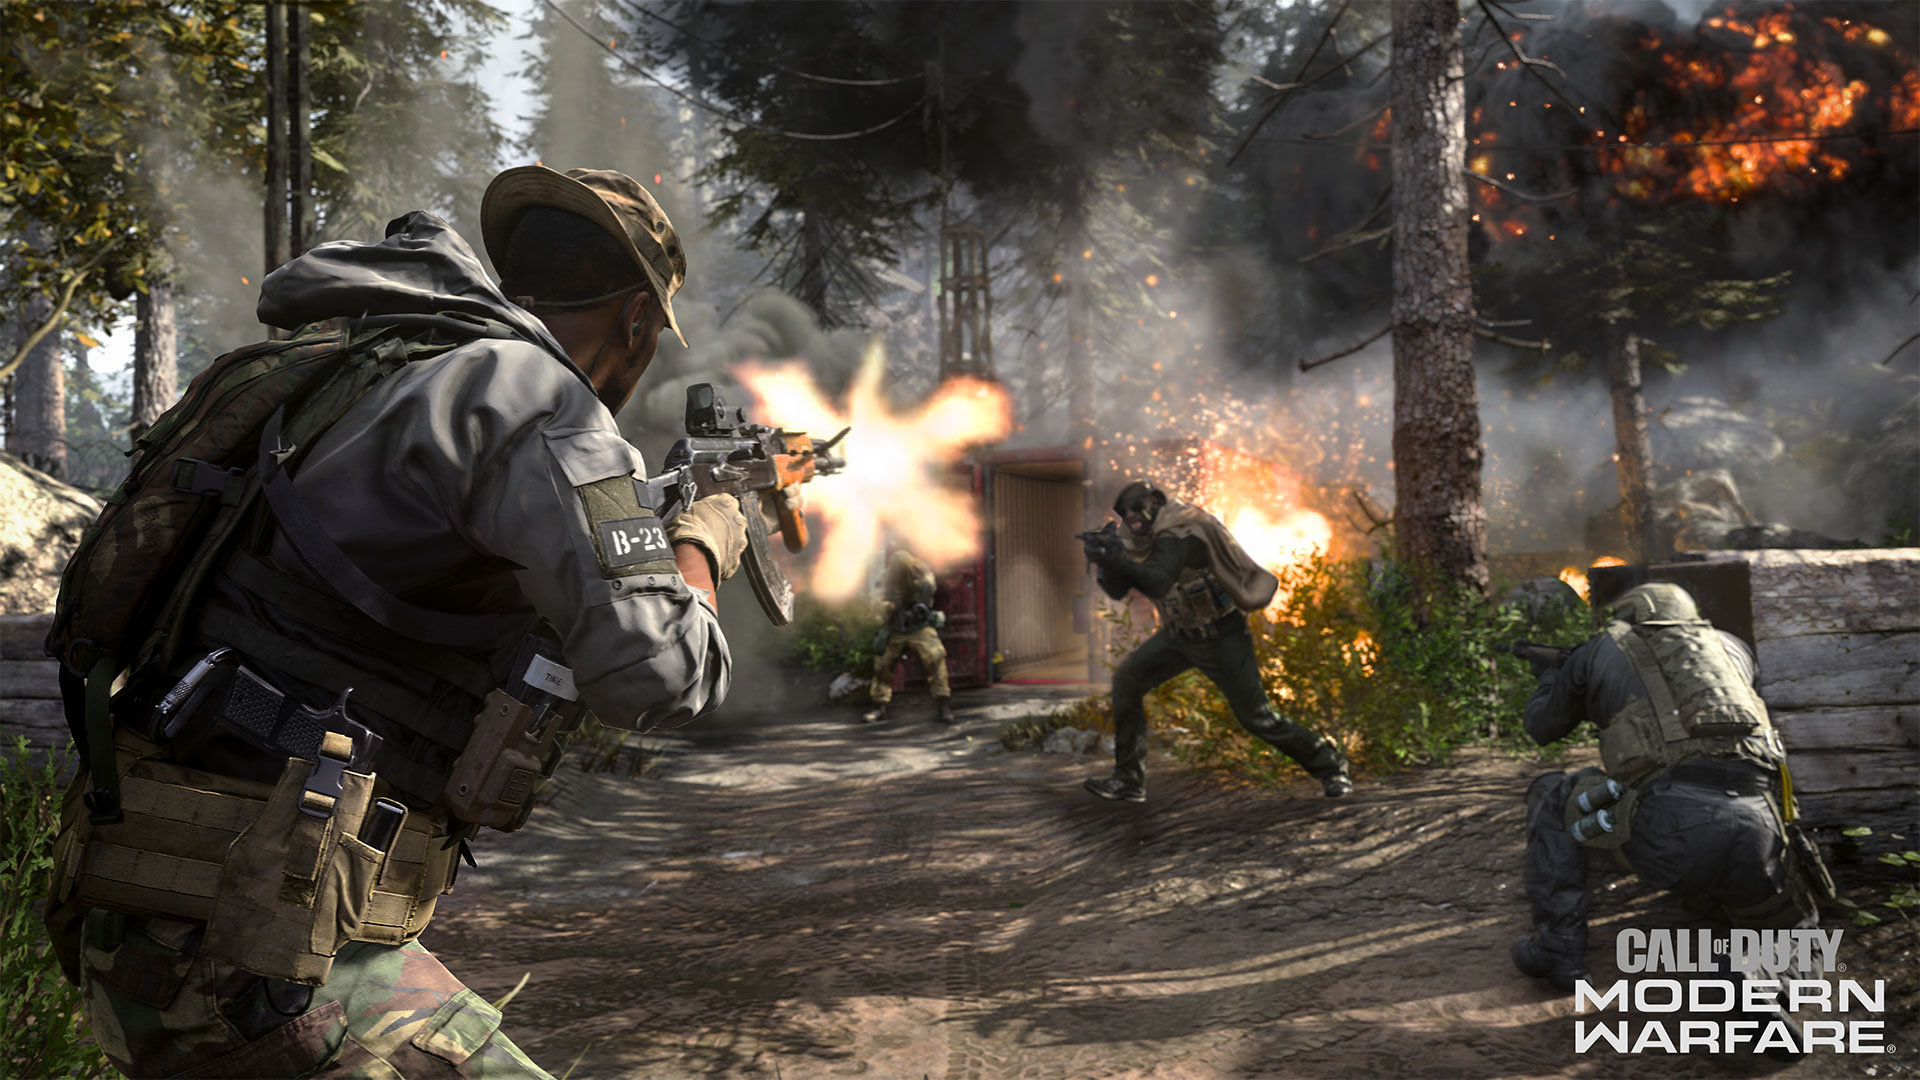 Call of Duty: Modern Warfare junta jogadores das diferentes plataformas no mesmo mapa